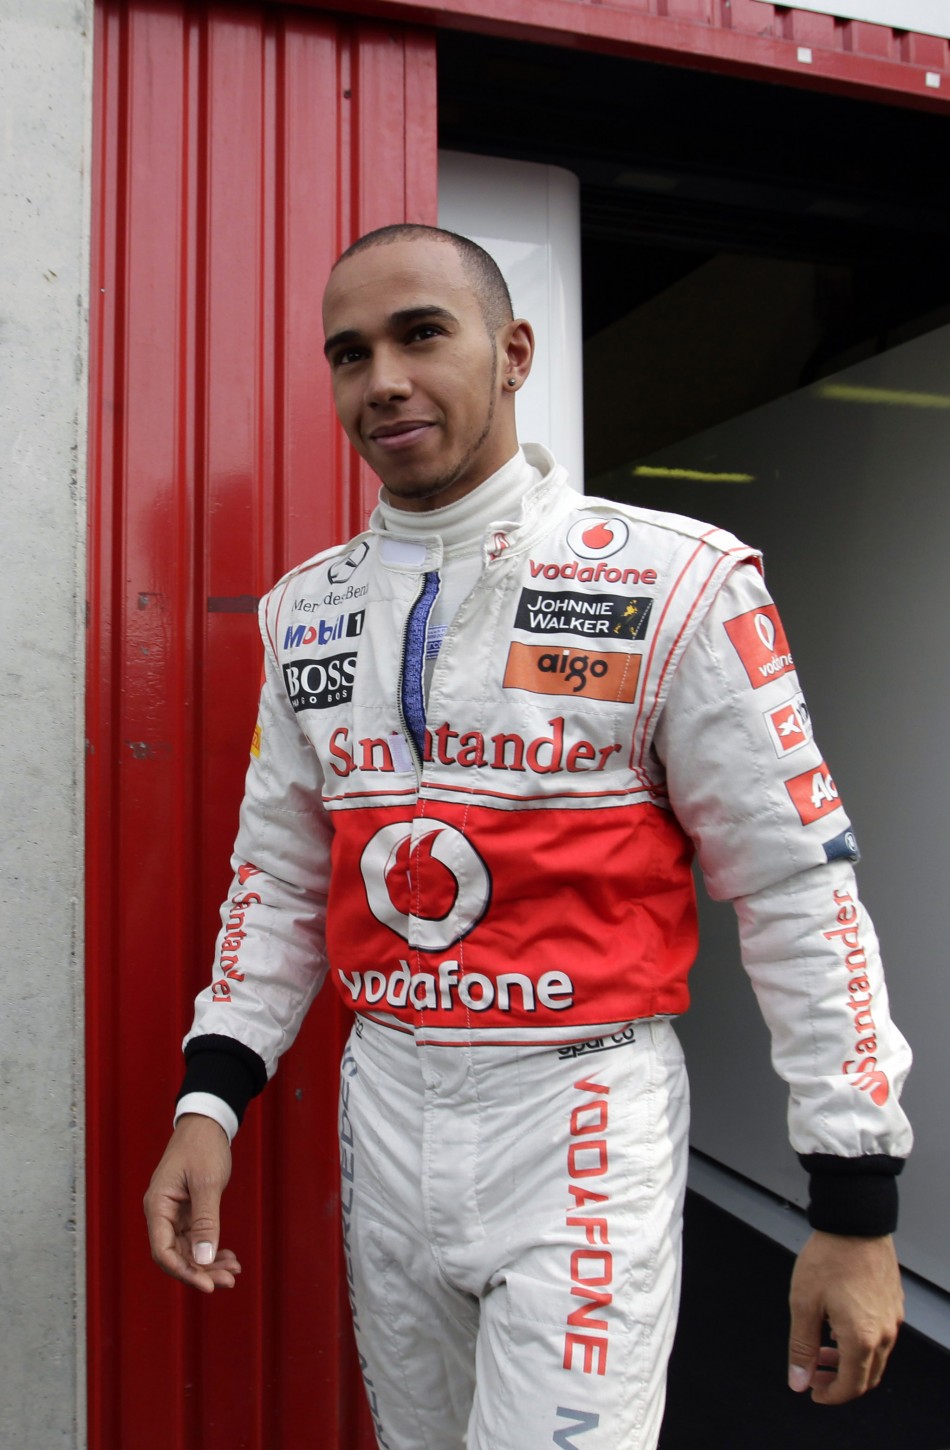 McLaren Formula One driver Lewis Hamilton qualifies pole position in Malaysia Grand Prix